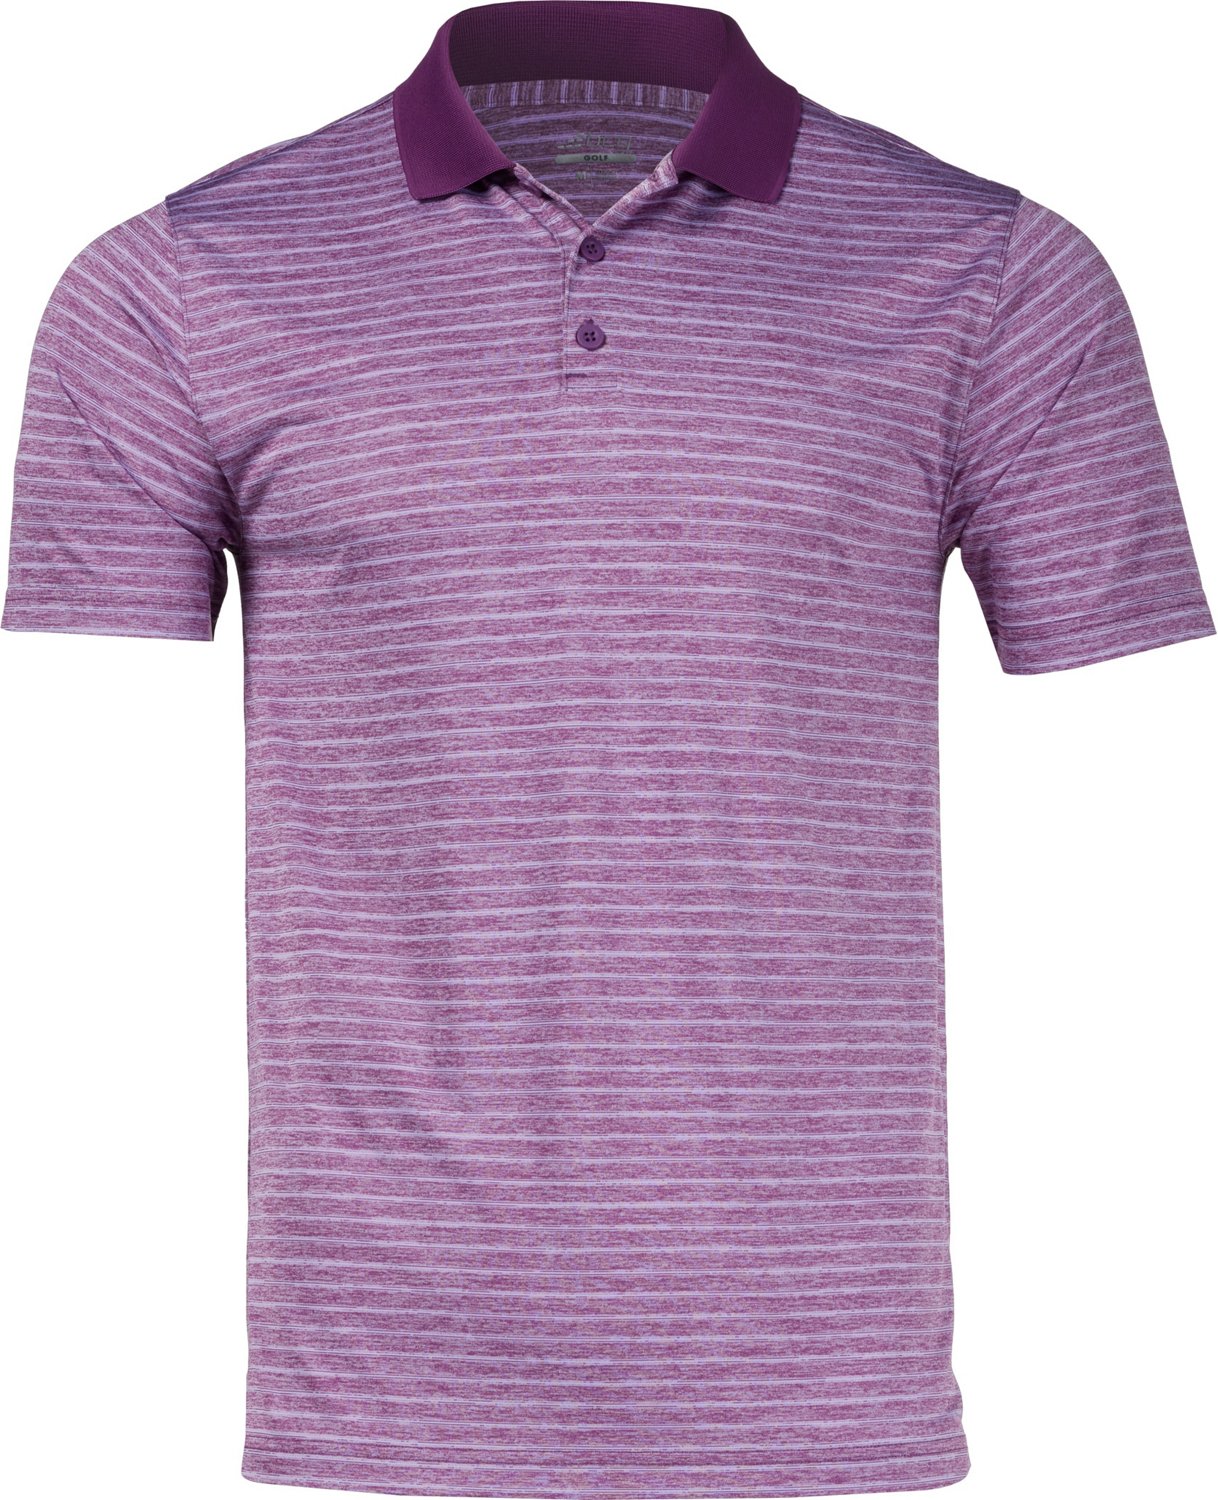 BCG Mens Golf Stripe Polo Shirt